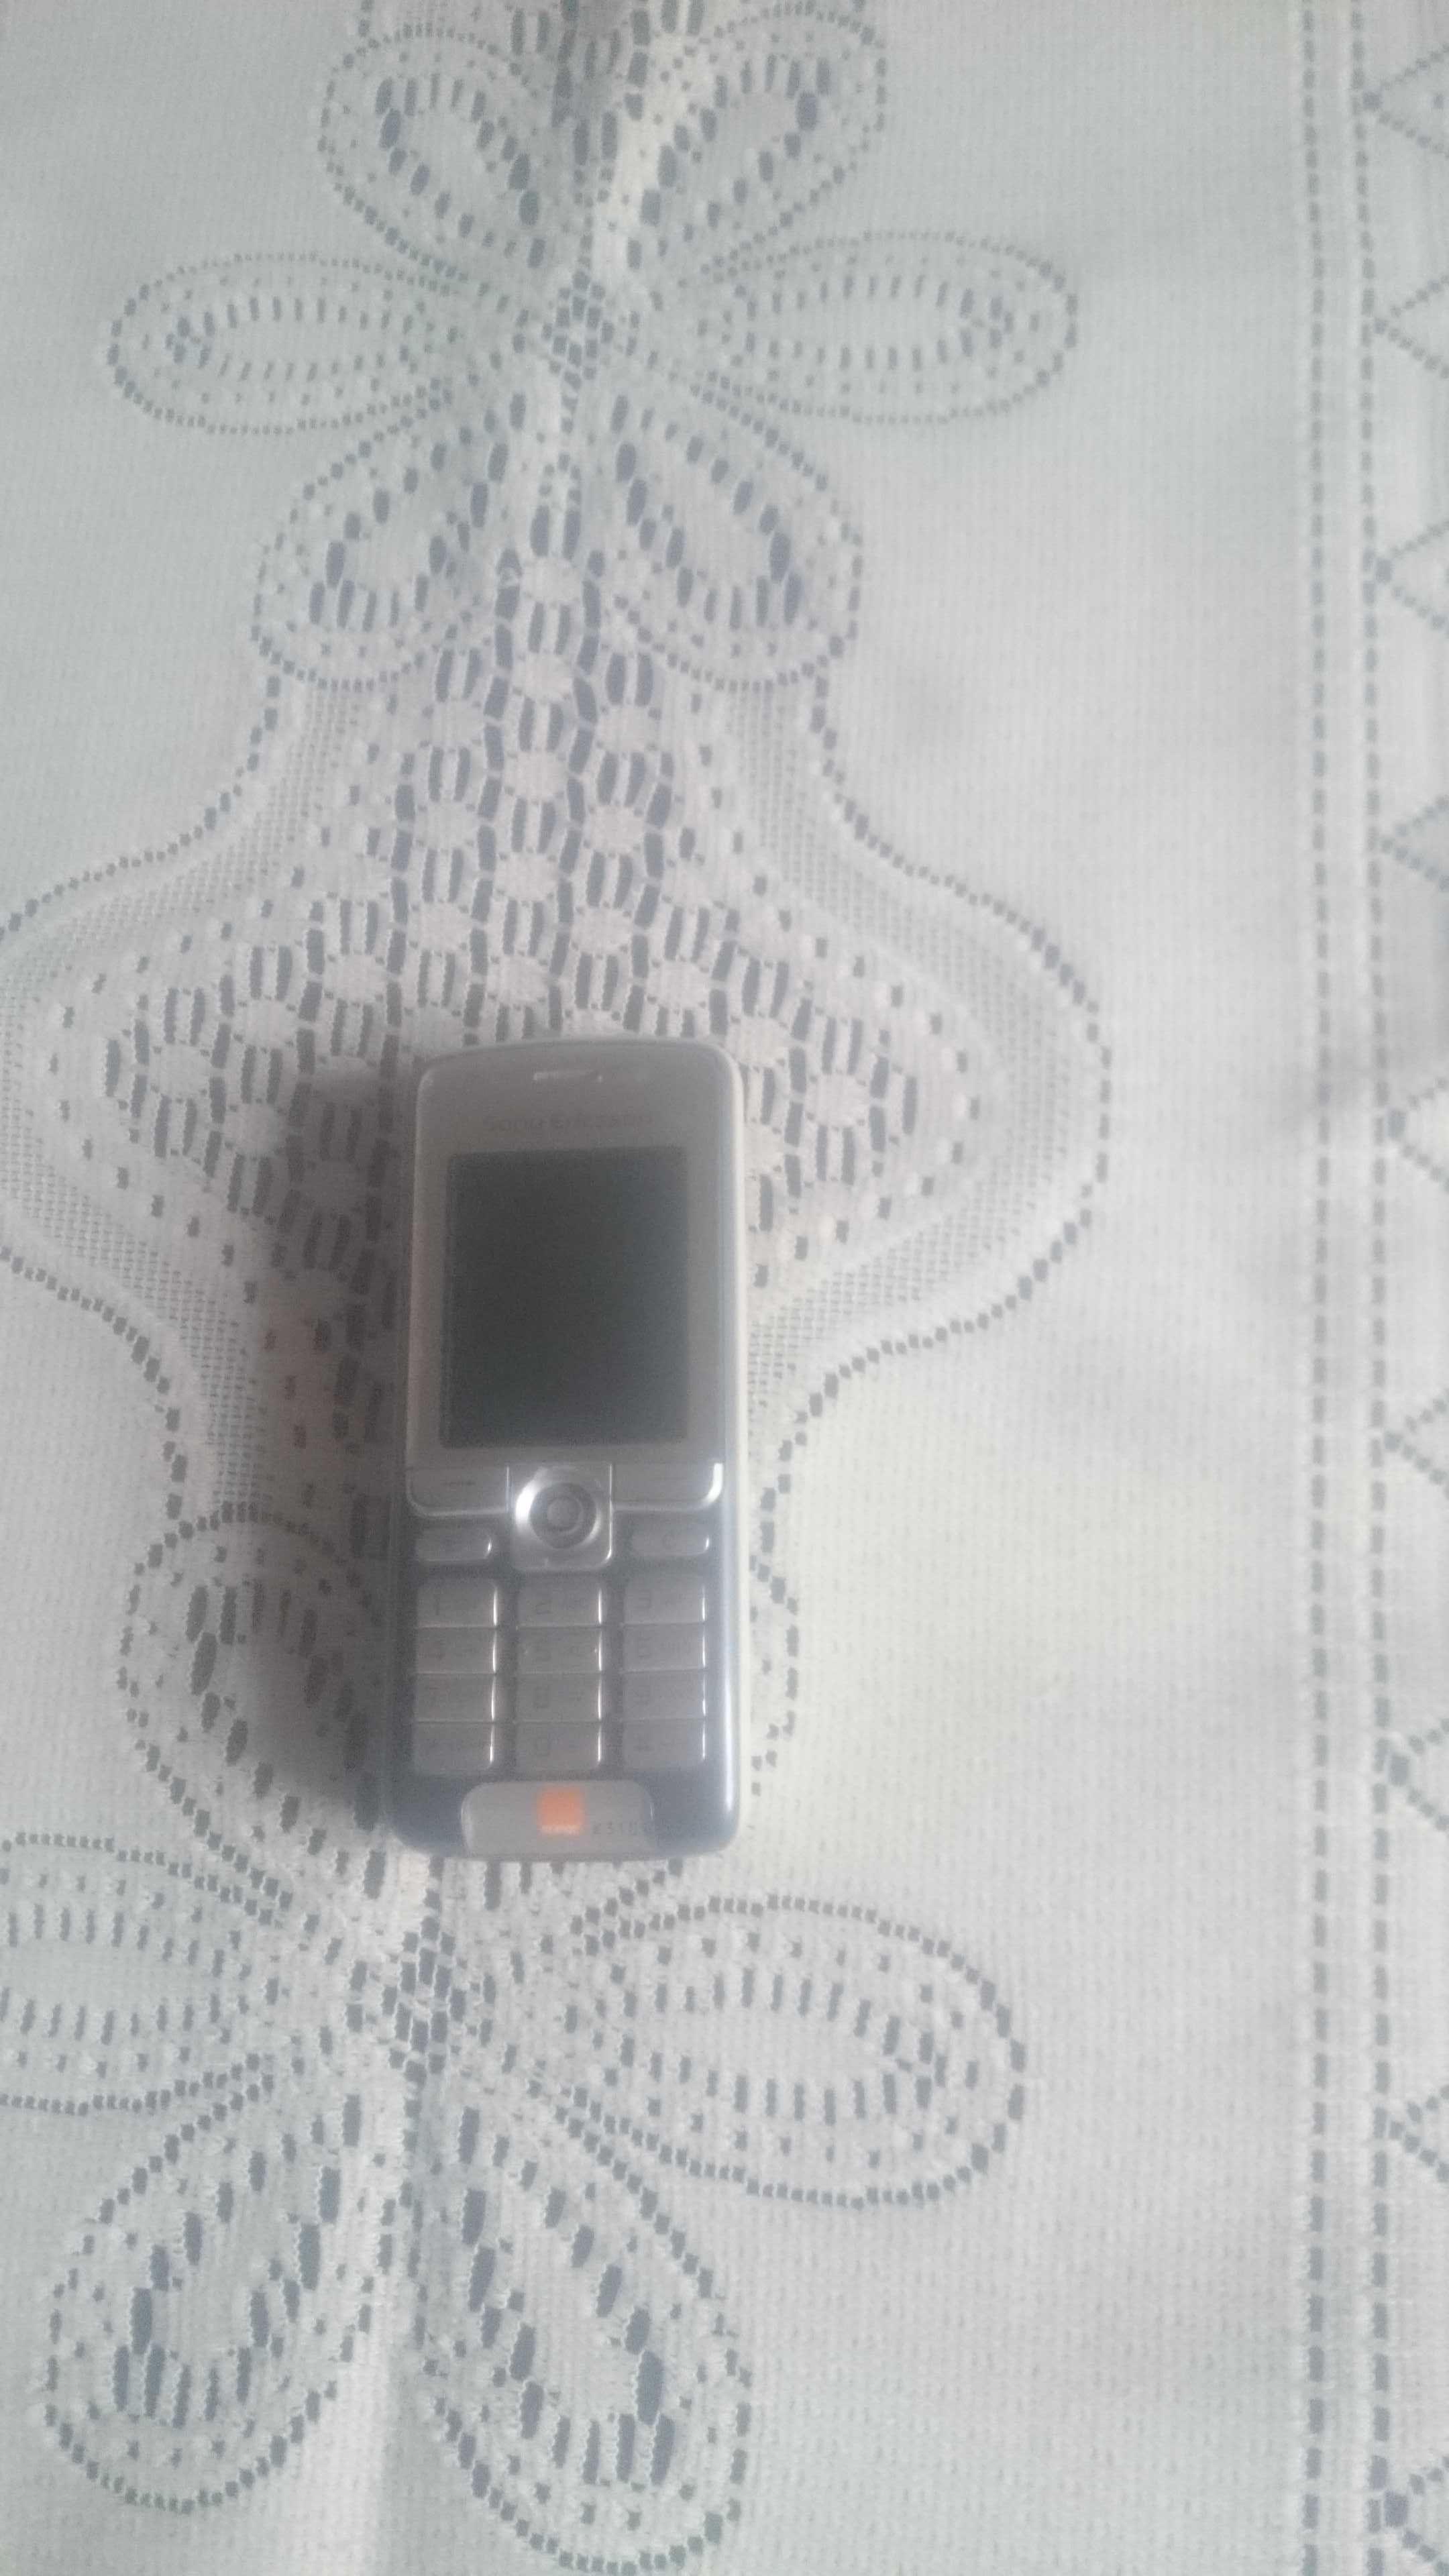 Sony Ericsson k310i